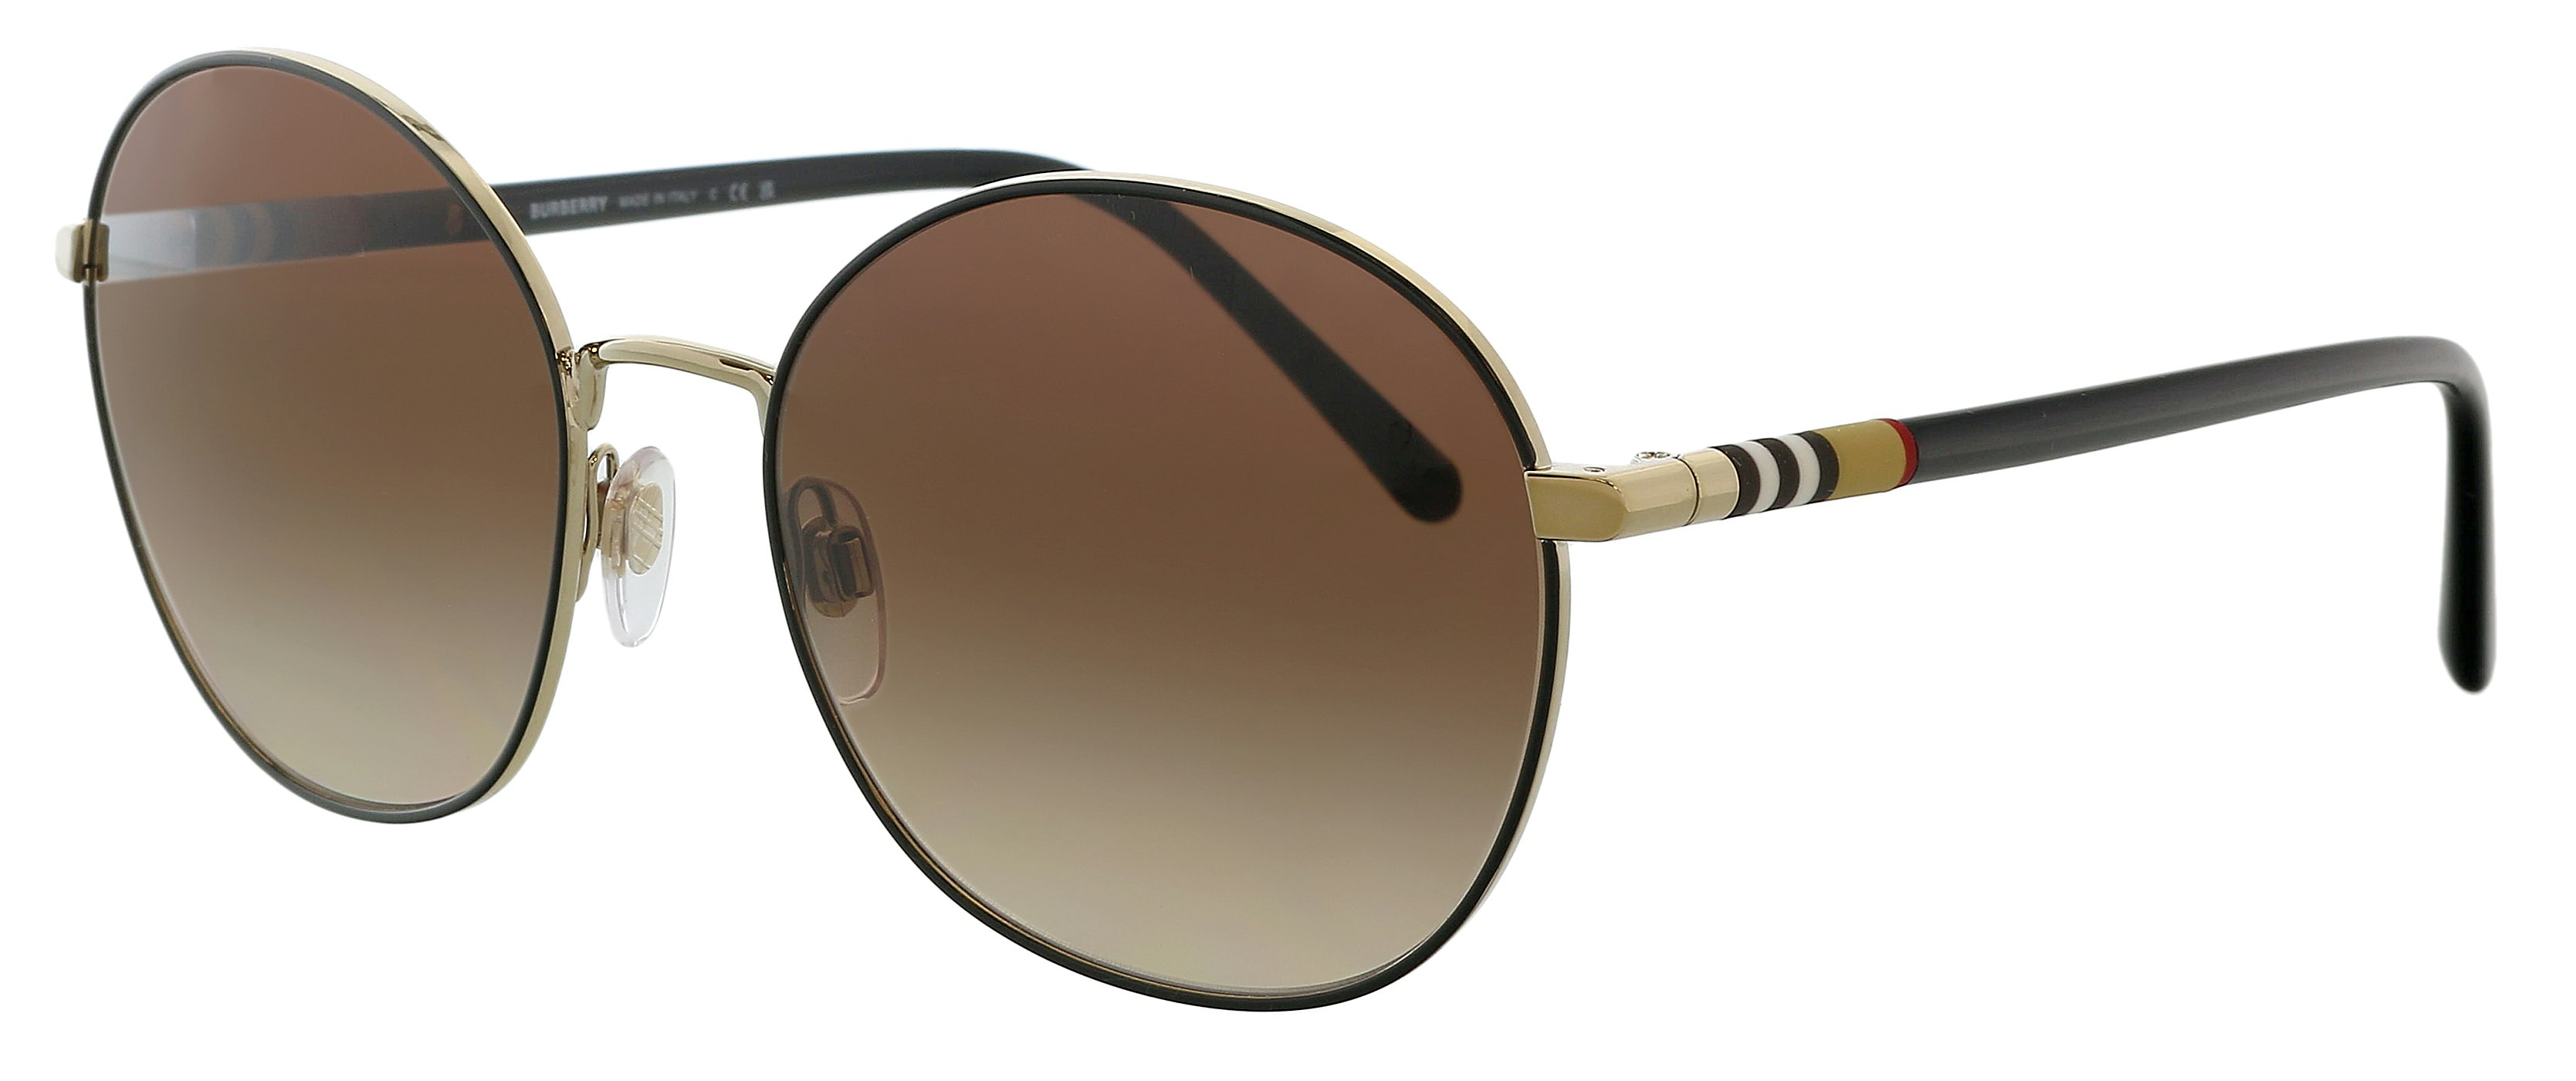 Buy Burberry Tasmin women's Sunglasses BE4366-39808G - Ashford.com